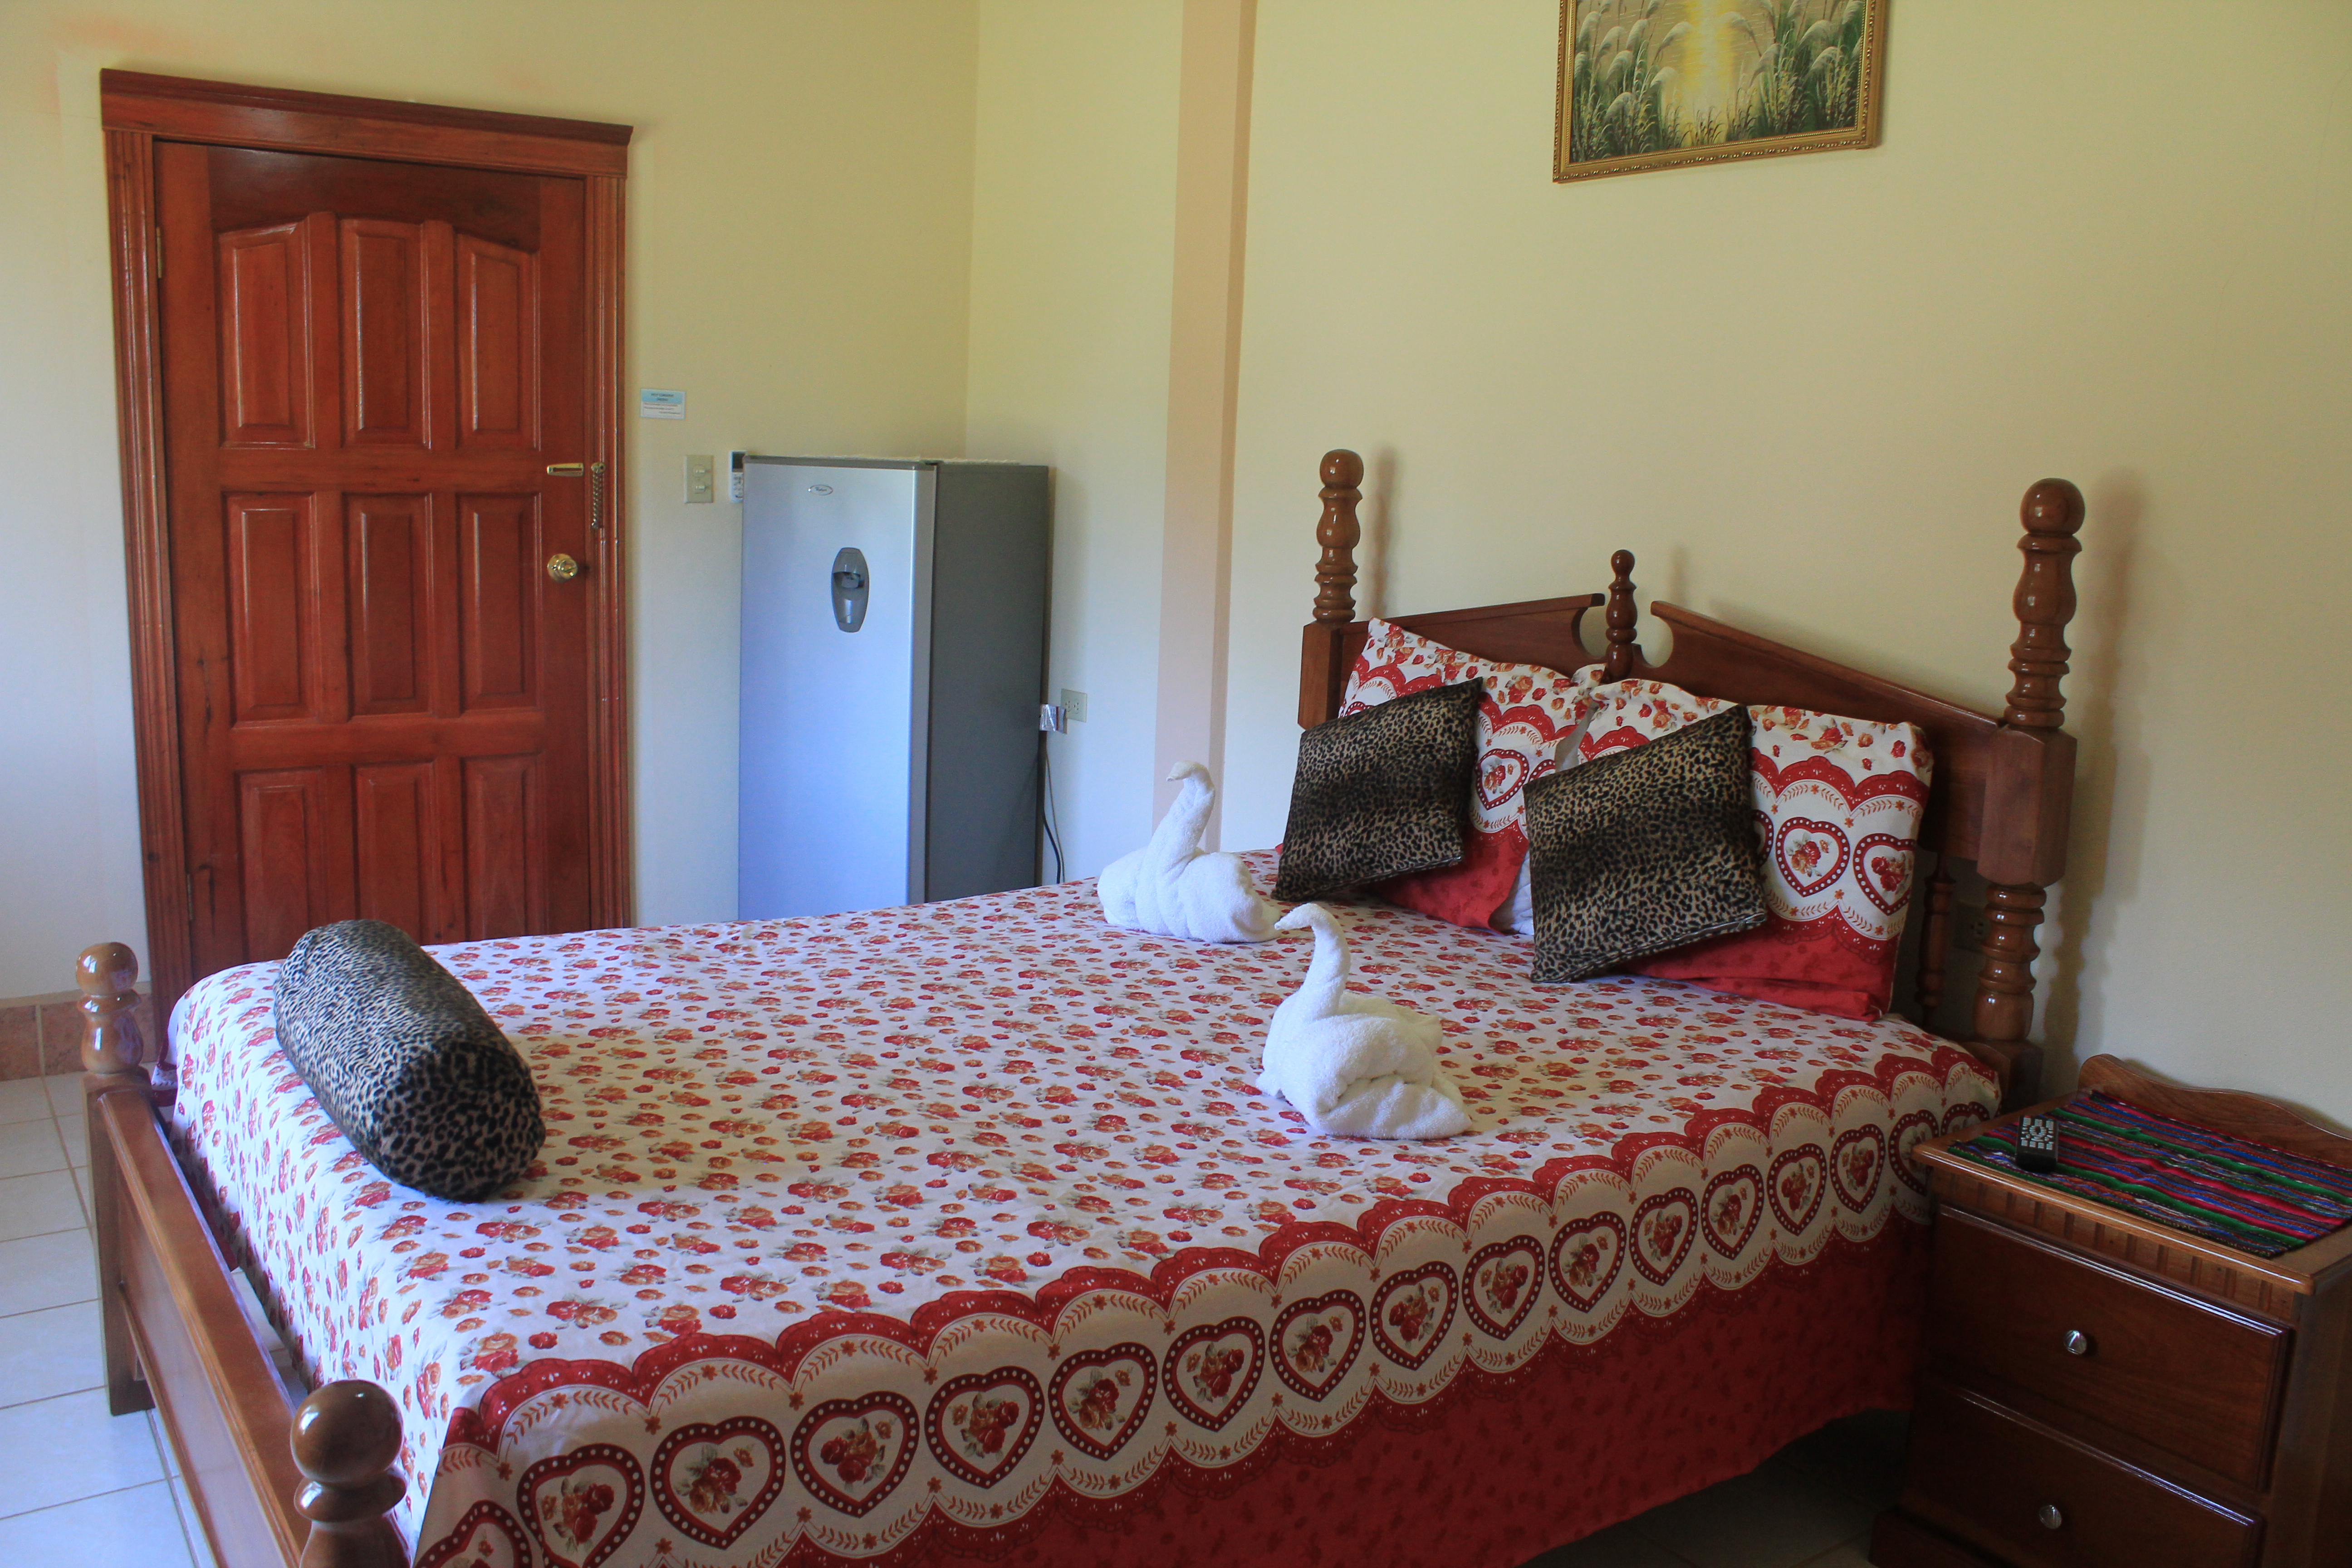 My Guesthouse room in San Ignacio